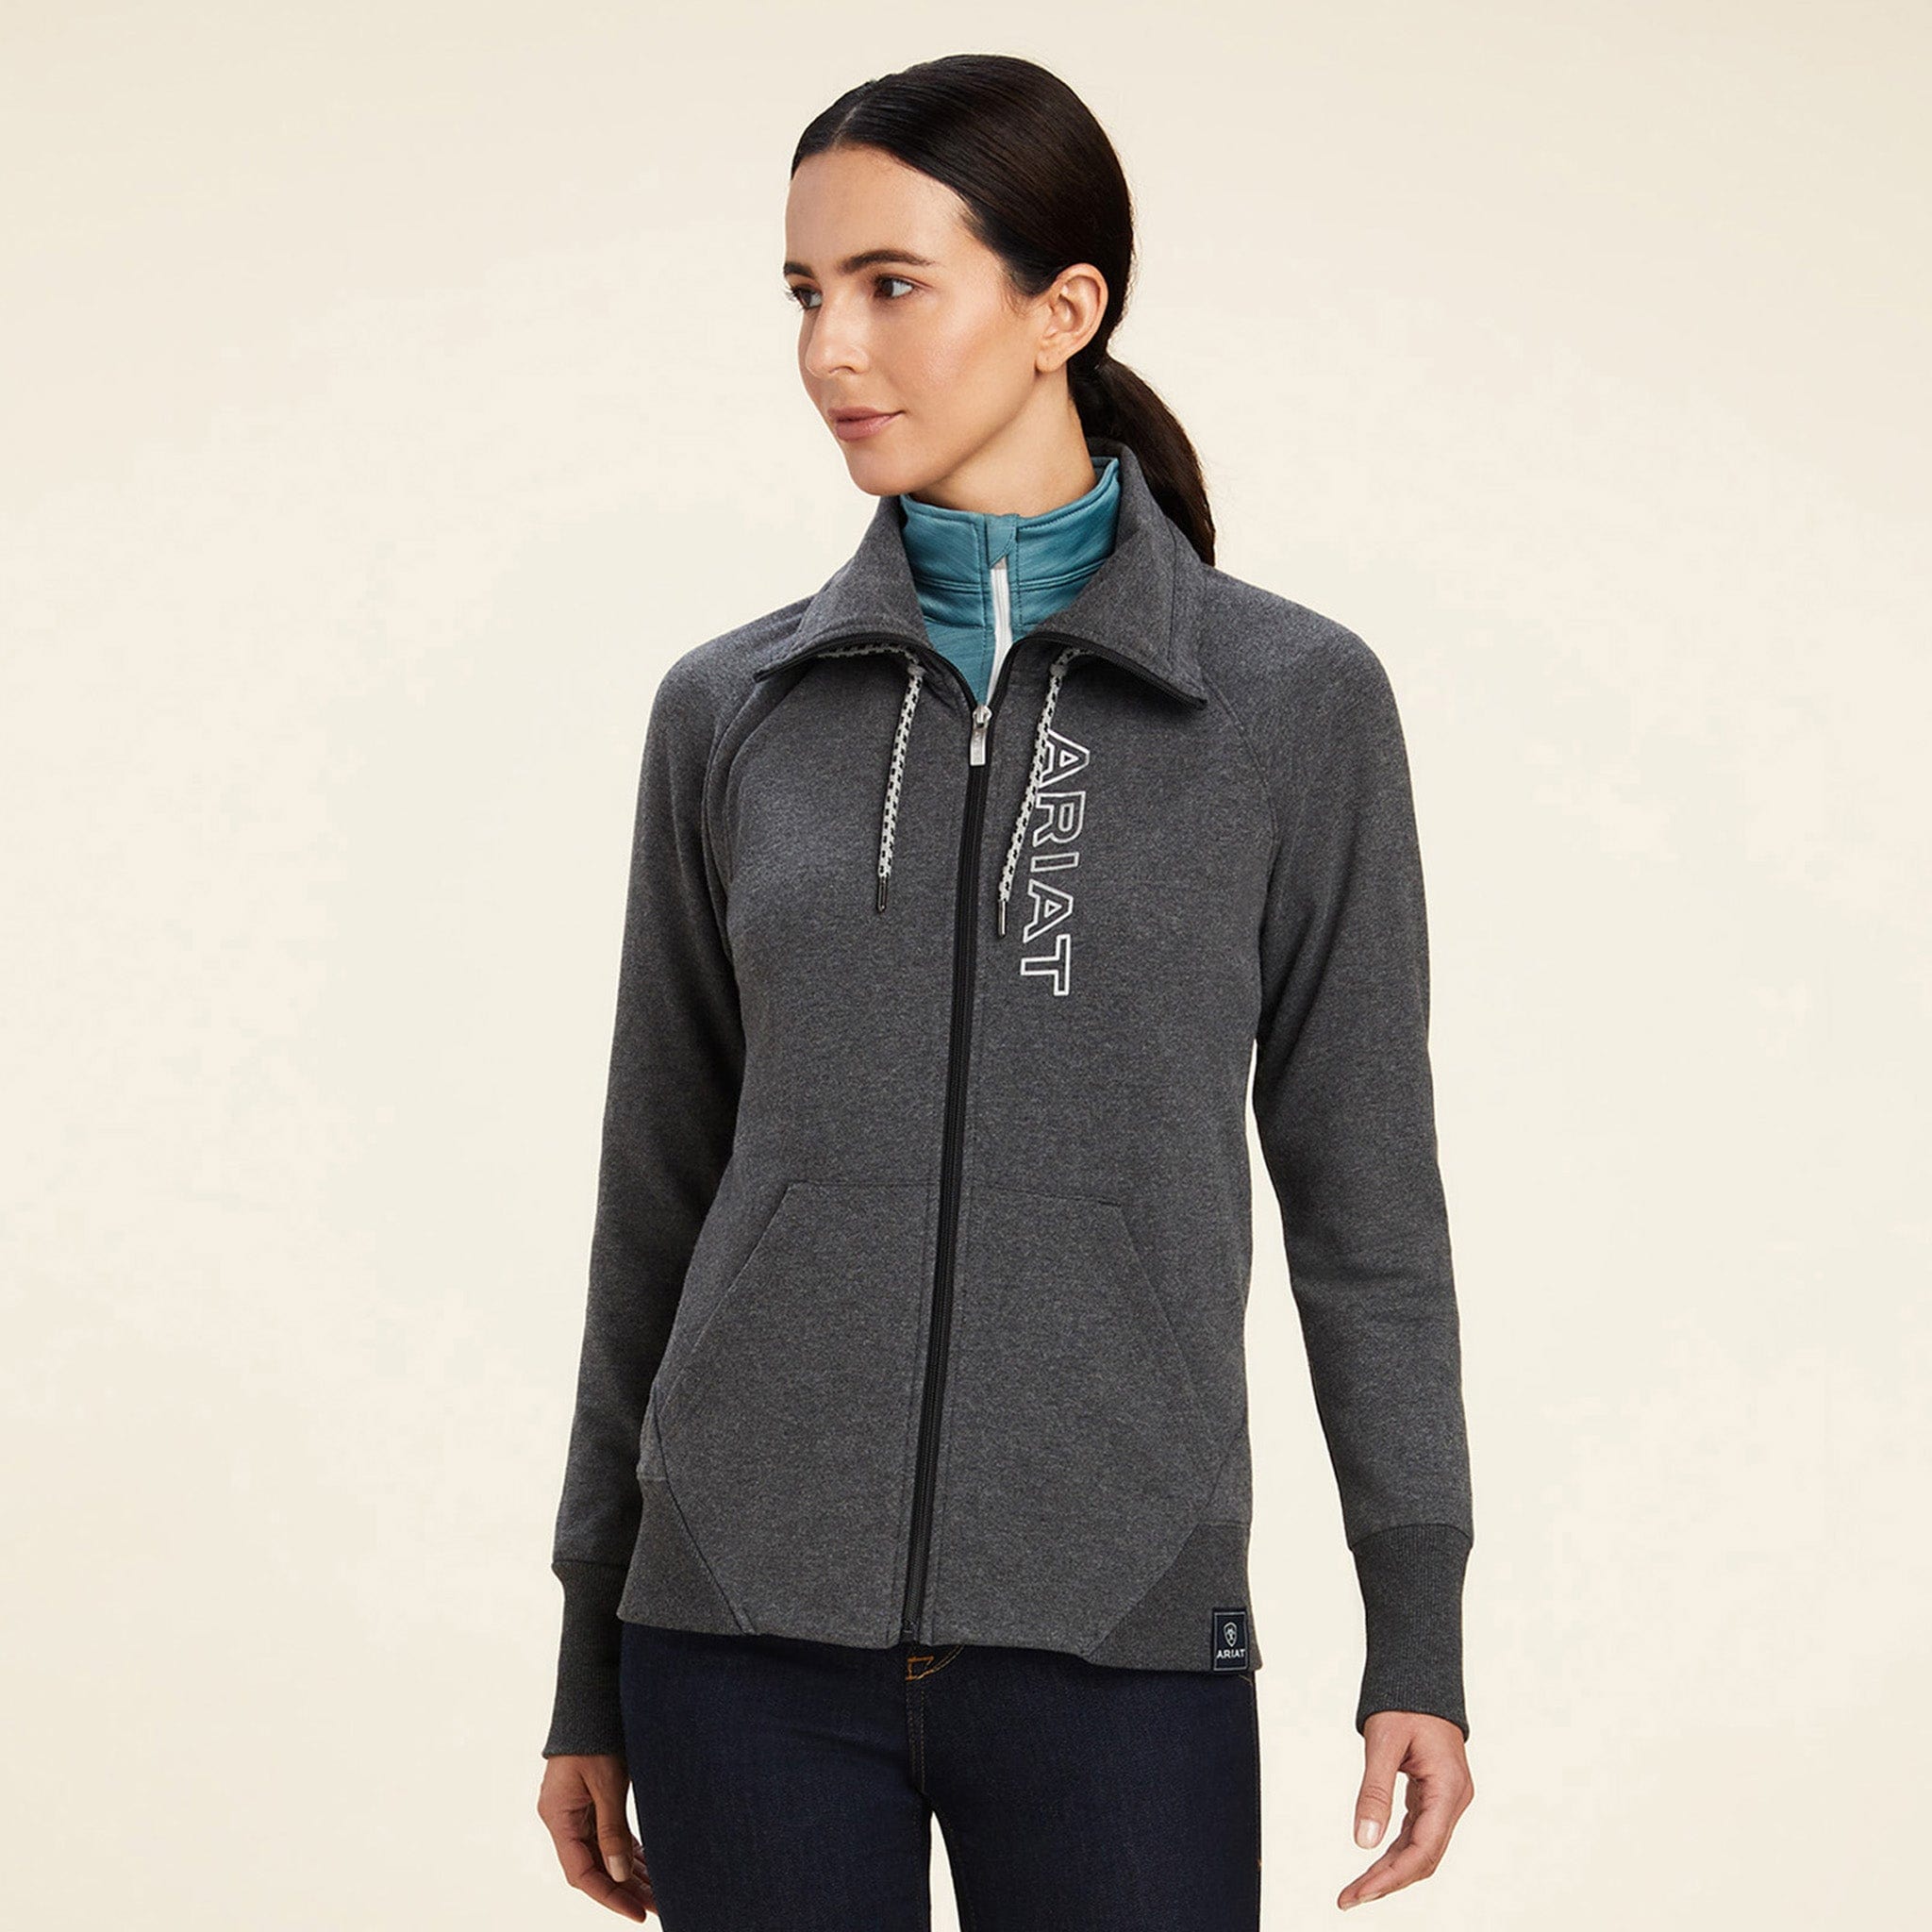 Ariat Team Logo Full Zip Sweatshirt Charcoal Grey 10041227 Front View On Model